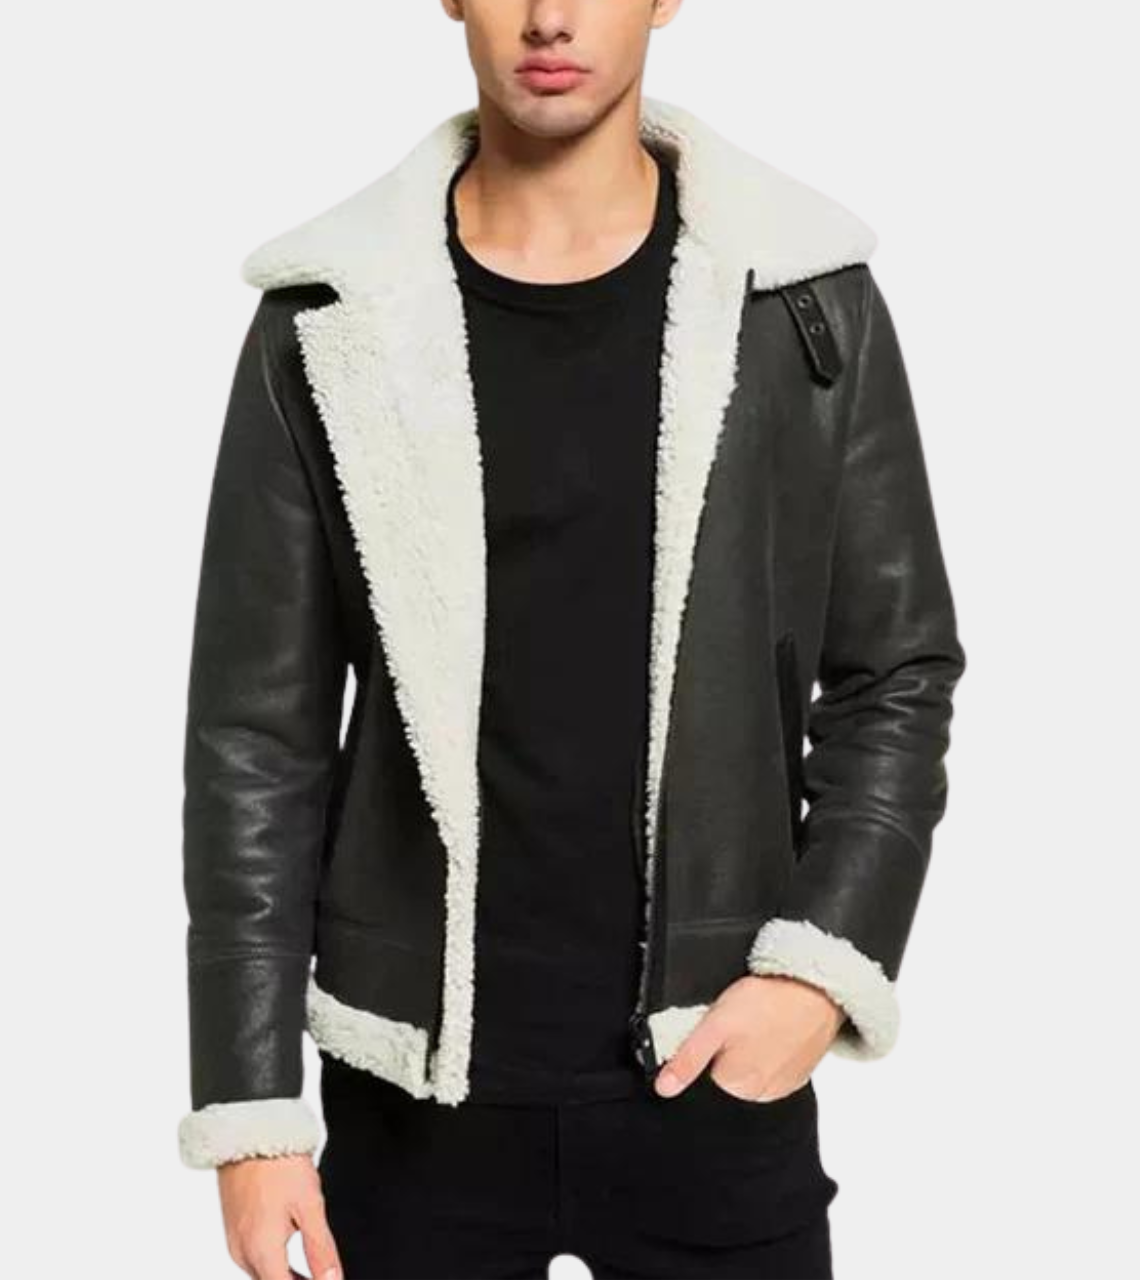 Men’s Black Leather Shearling Jacket